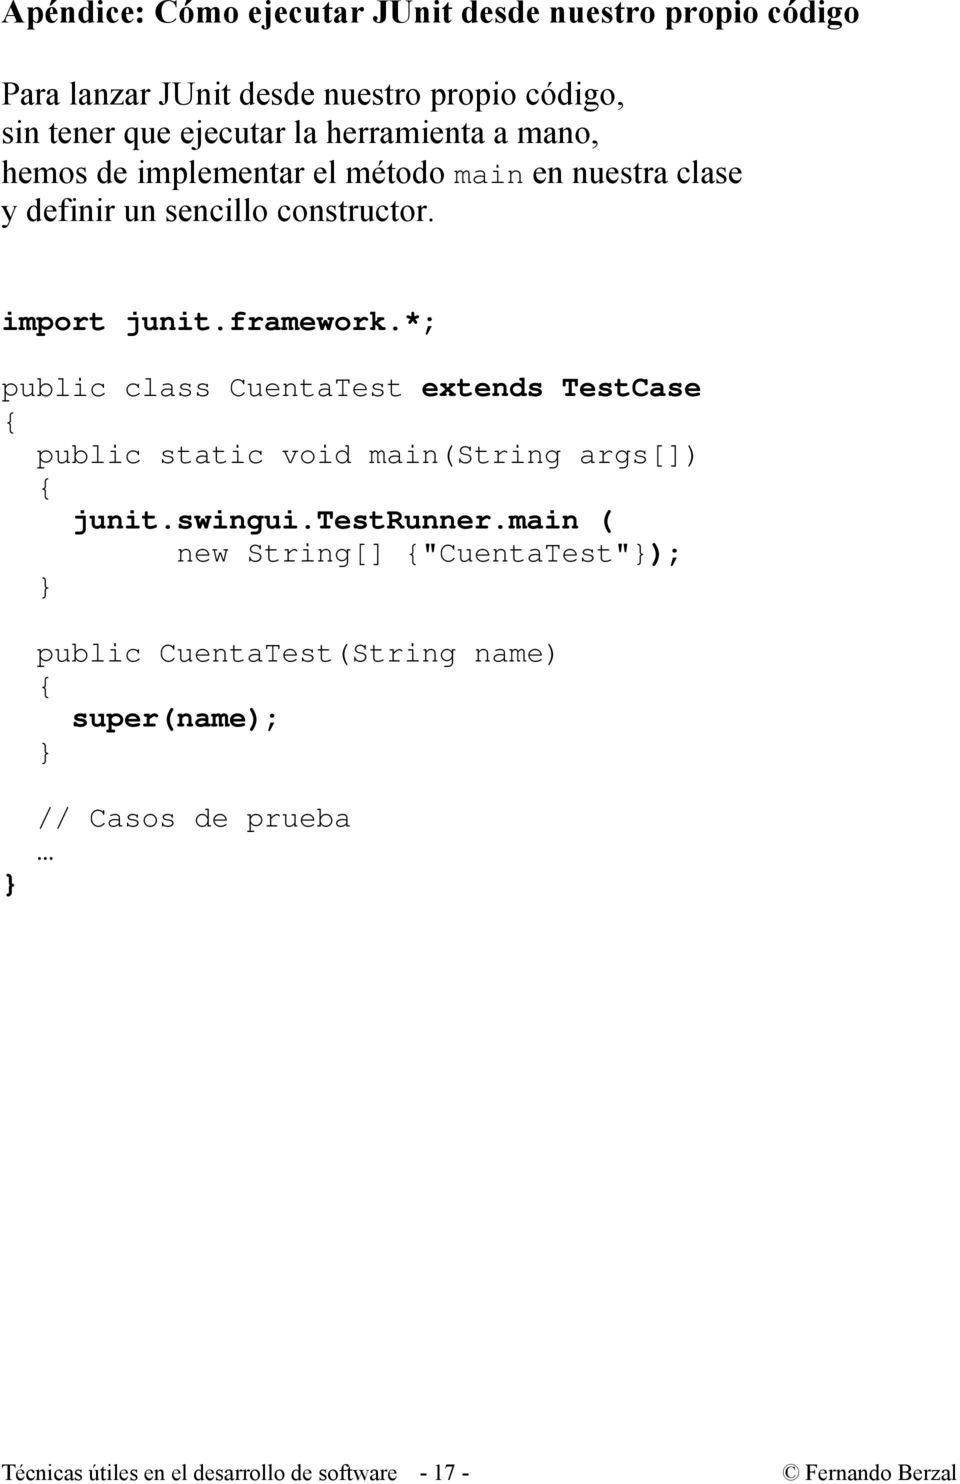 framework.*; public class CuentaTest extends TestCase public static void main(string args[]) junit.swingui.testrunner.